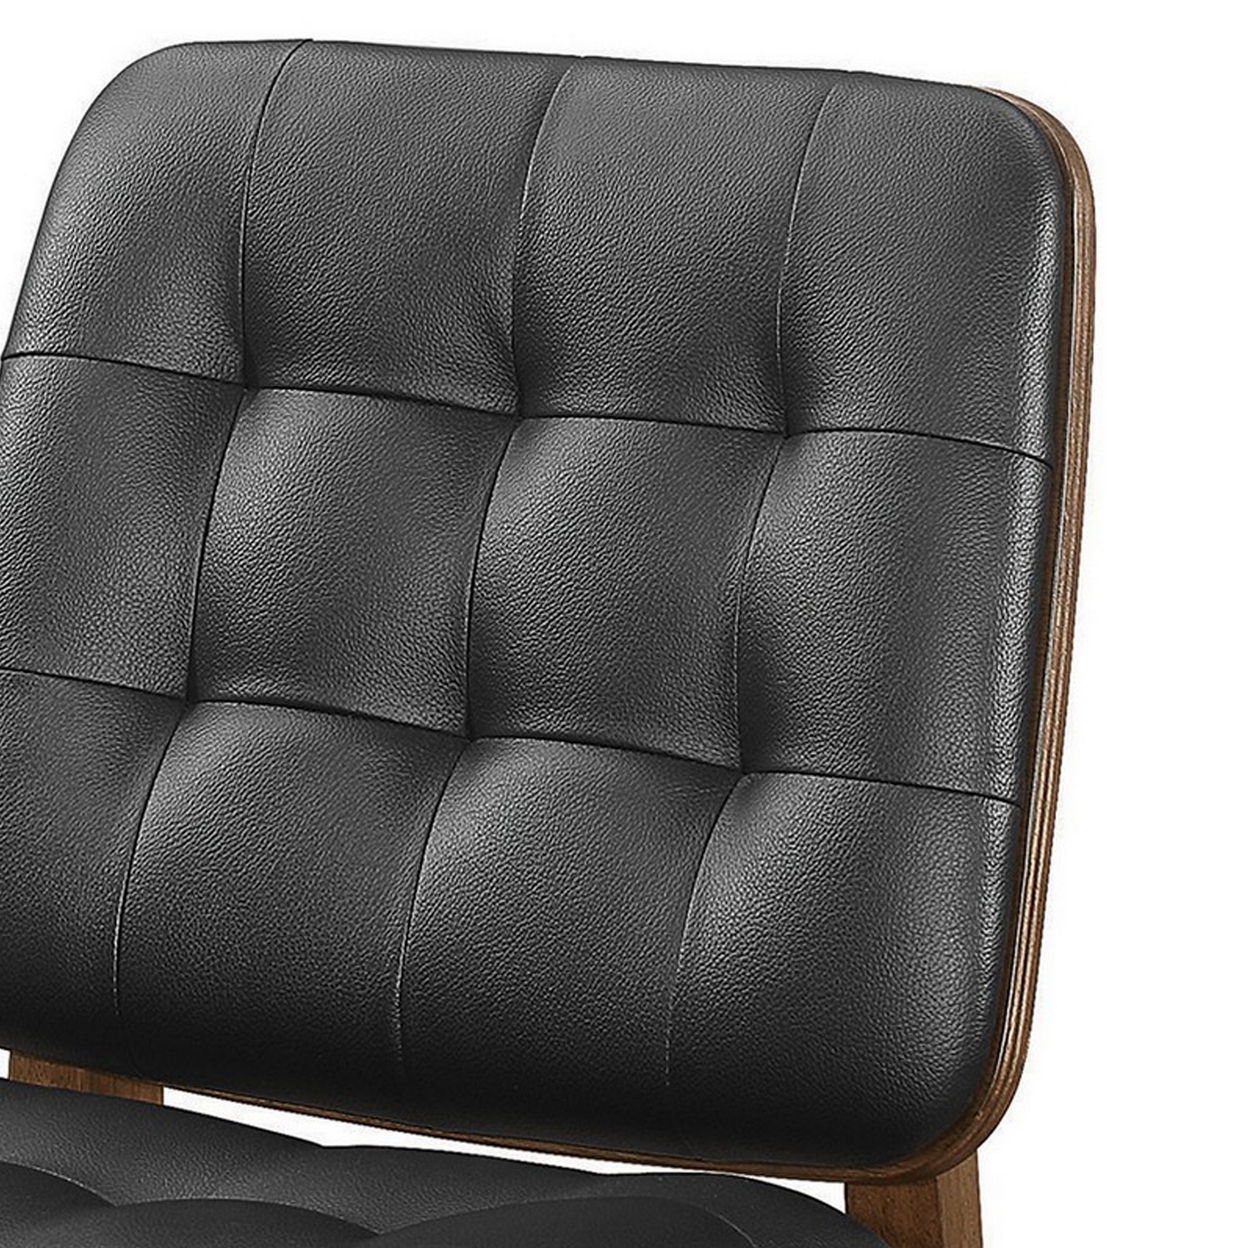 18 Inch Dining Chair, Set Of 2, Black Vegan Faux Leather, Tufted Seat - Saltoro Sherpi